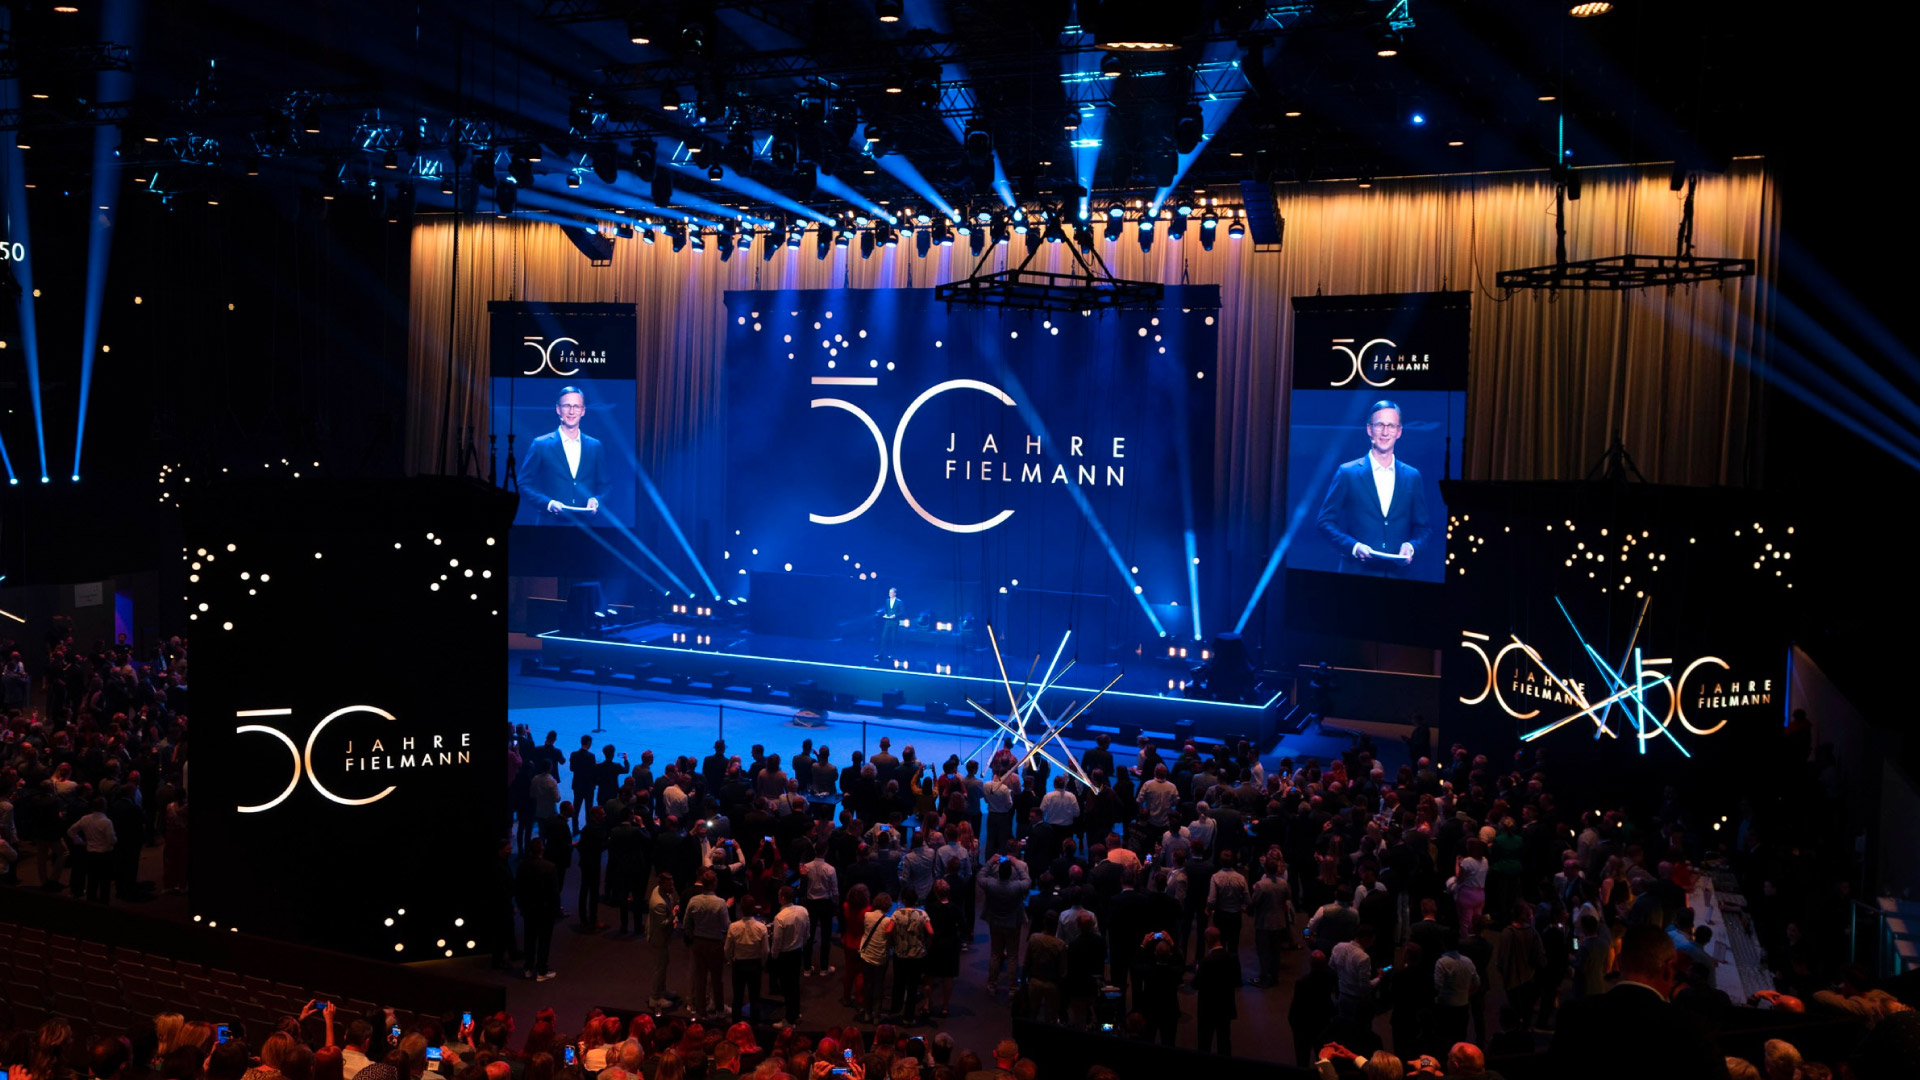 Fielmann 50 years anniversary